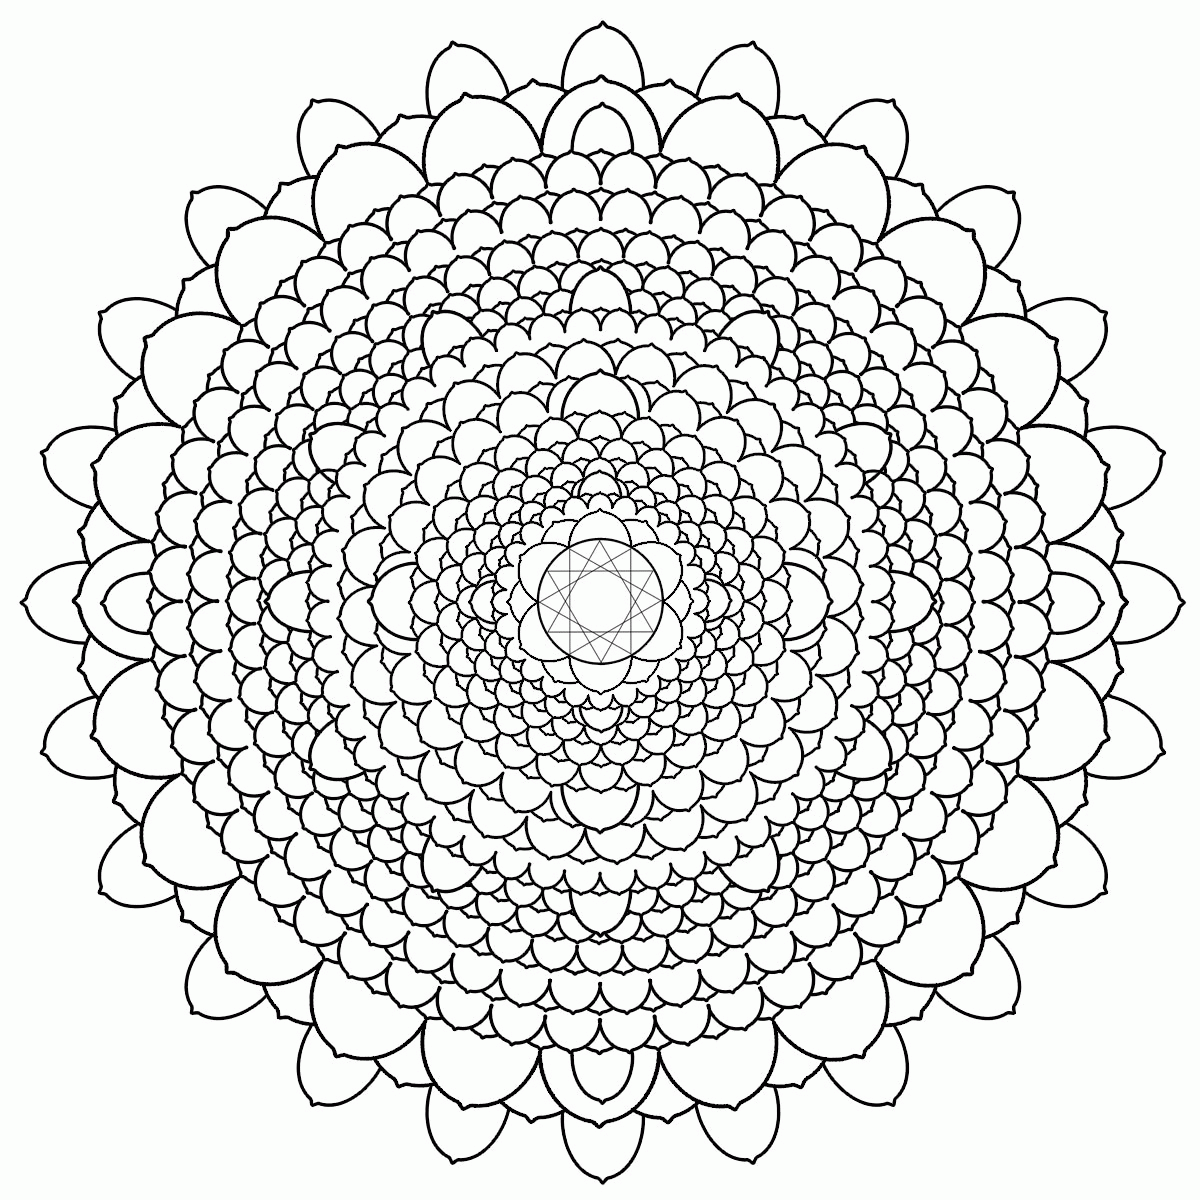  Intricate Coloring Pages Lotus - Intricate Mandala